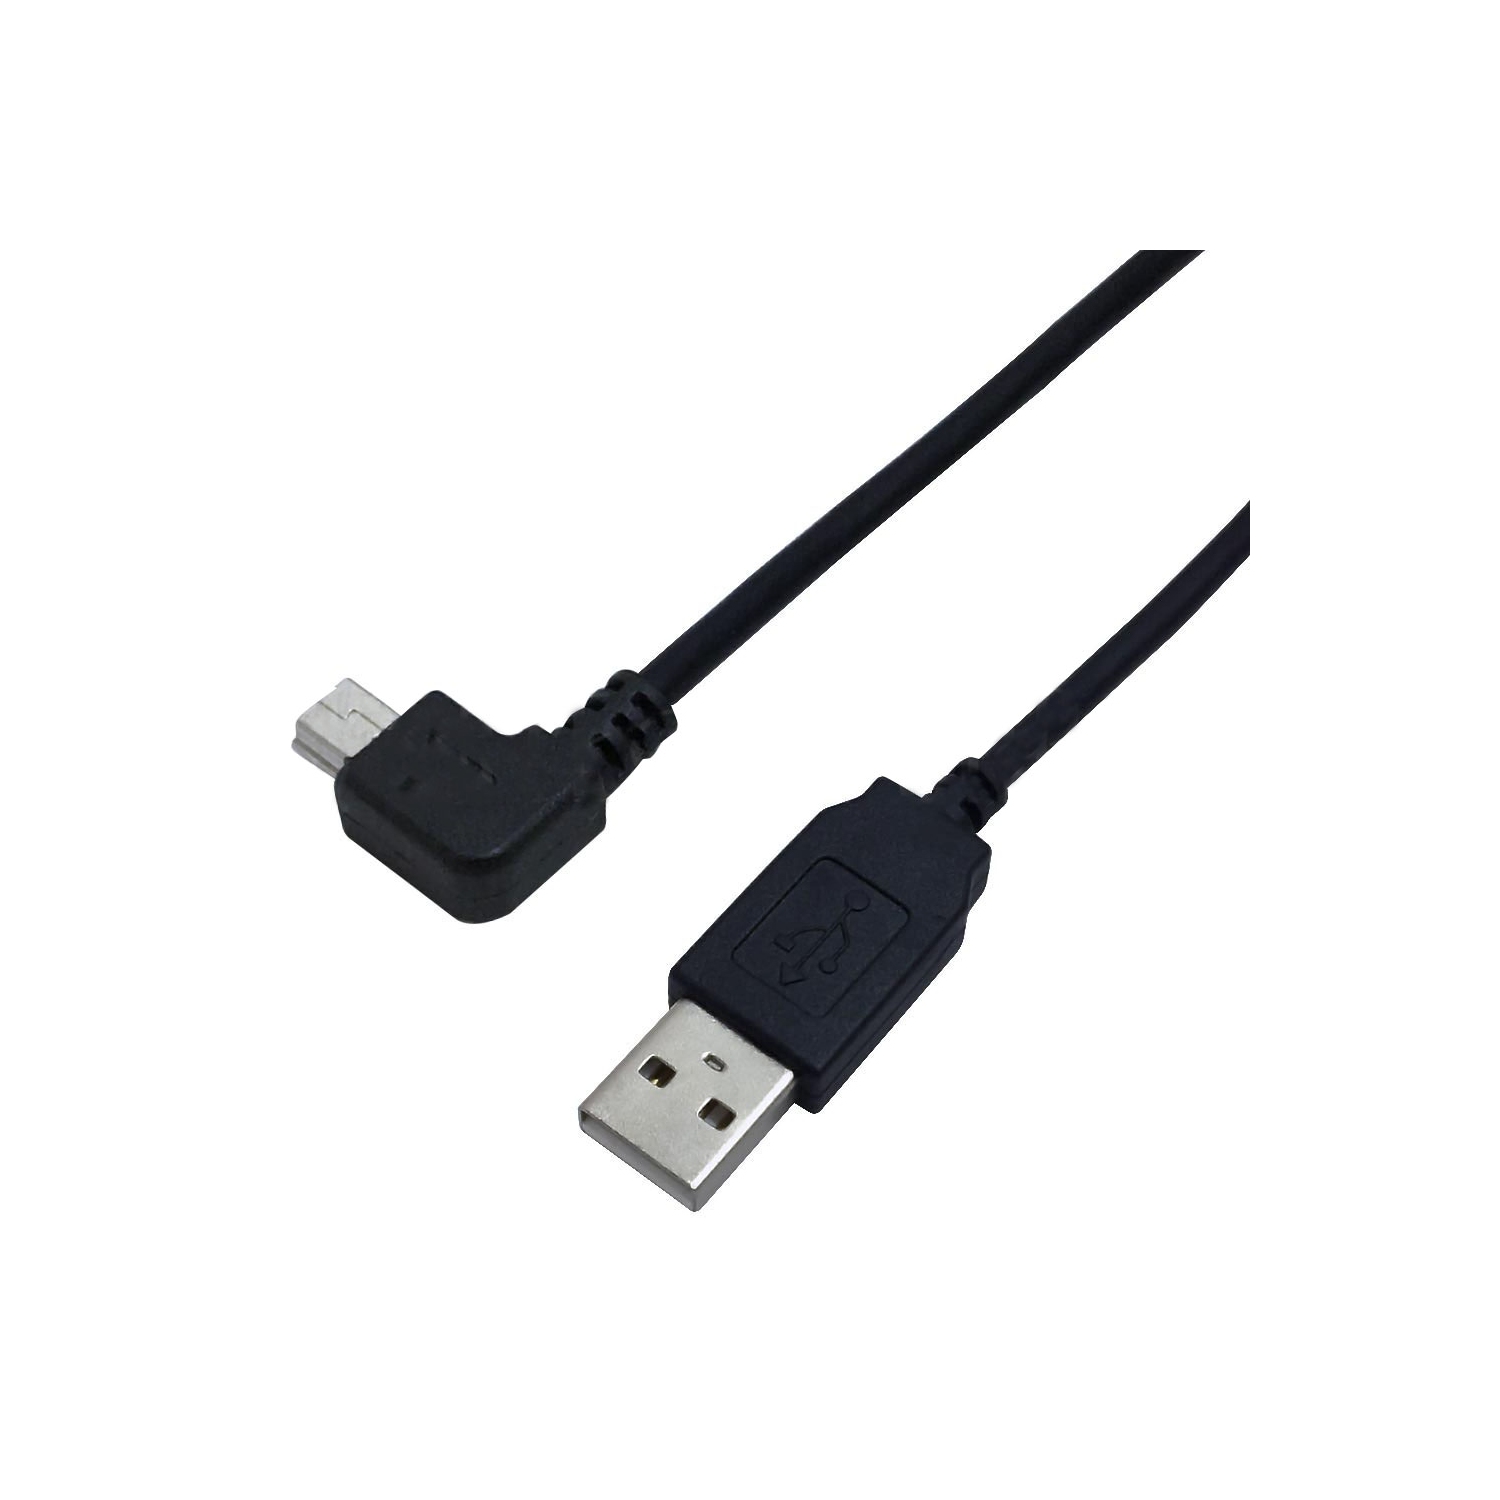 Free Shipping! HYFAI USB 2.0 A Straight Male to Mini-B 5-Pin Mini USB Left Angle Male Cable, 6 ft